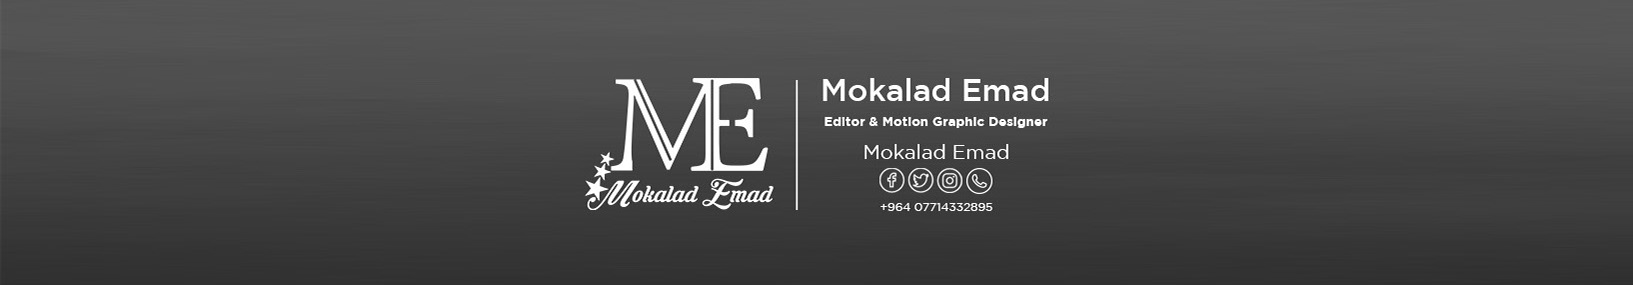 Mokalad emad's profile banner